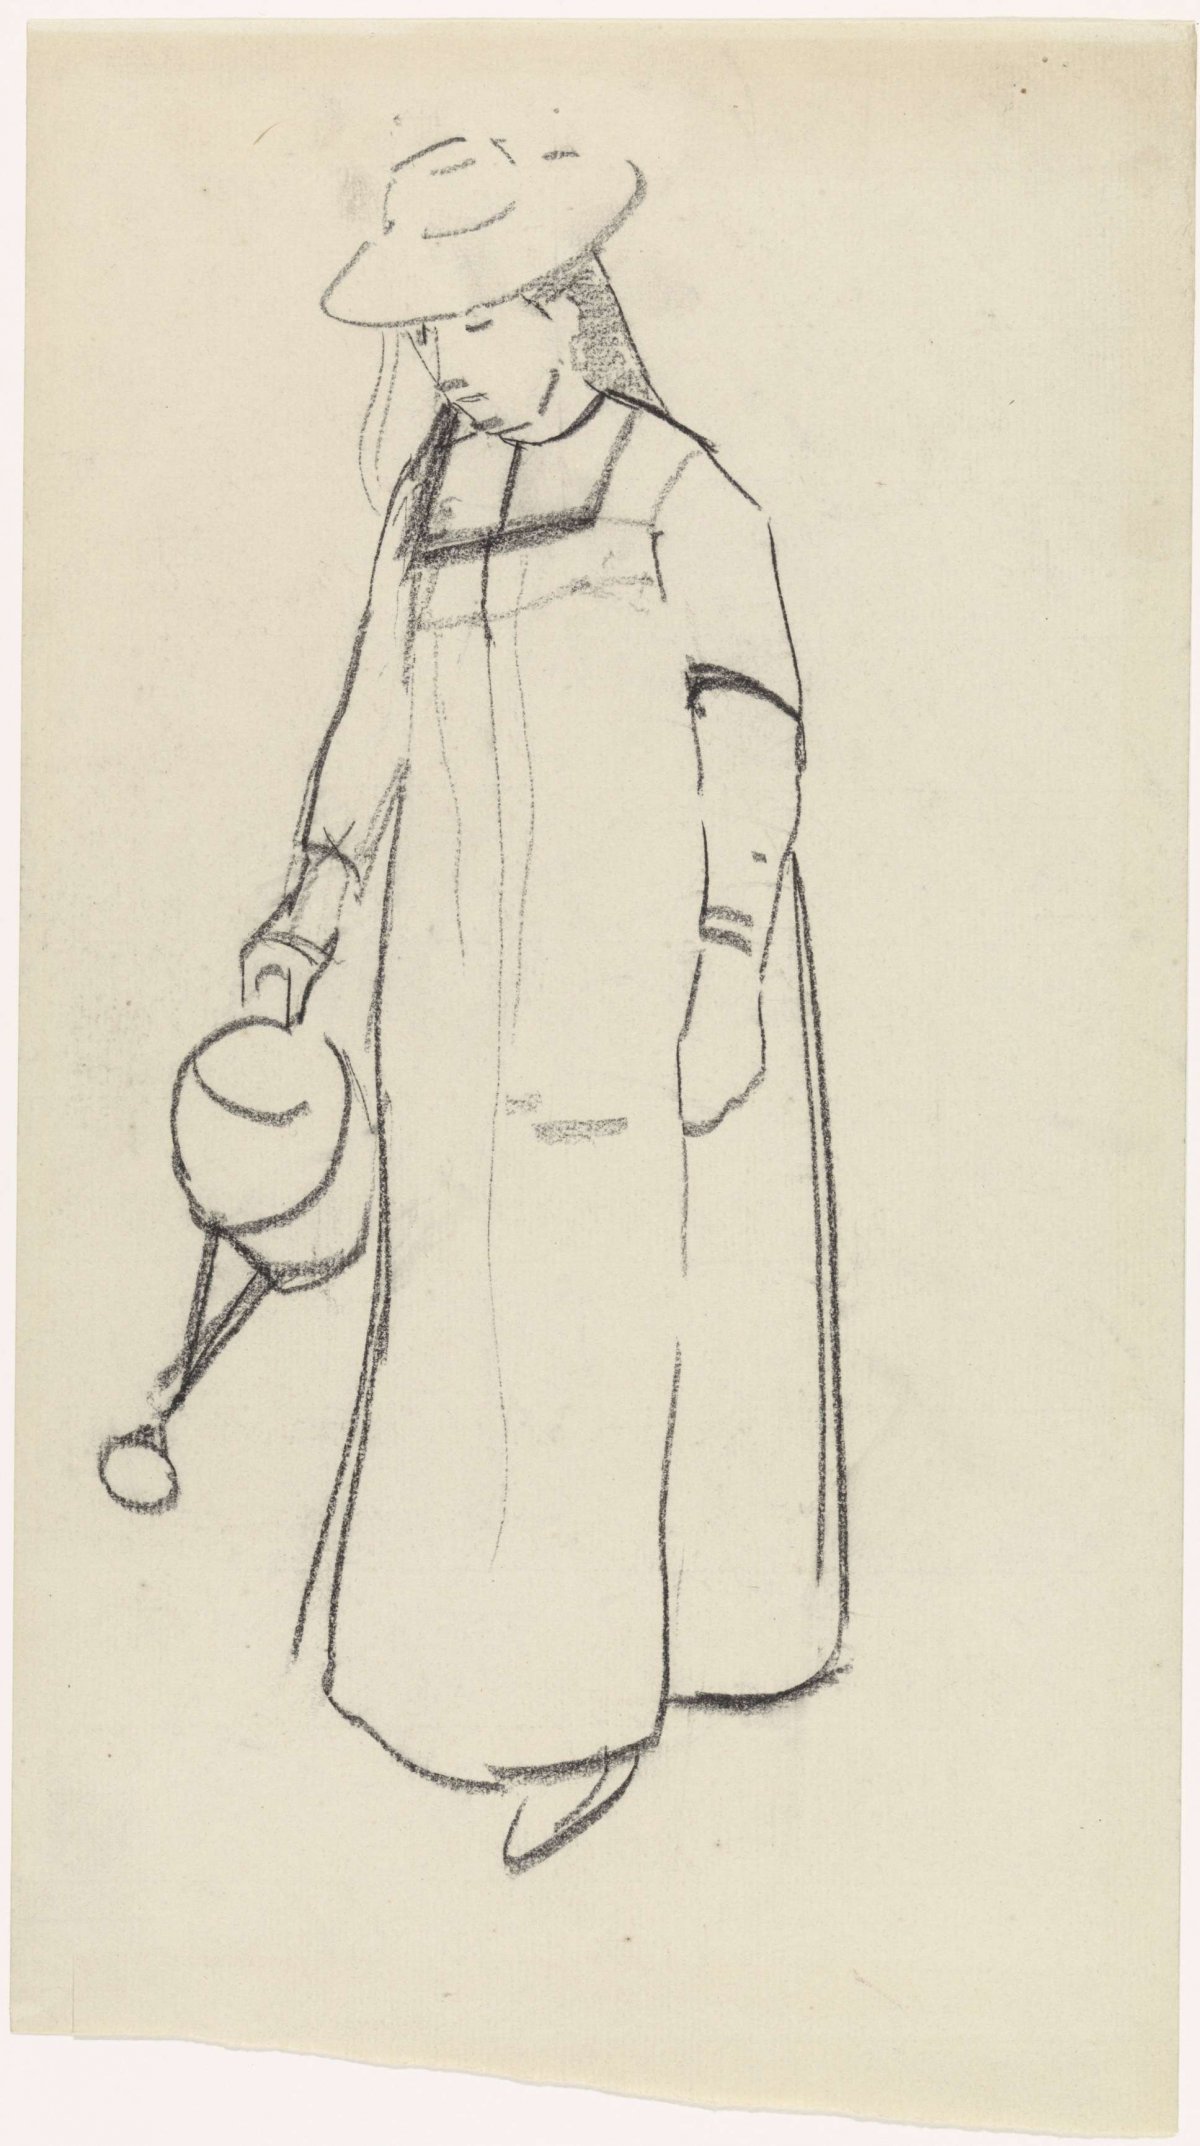 Sketch of a woman watering plants, Gerrit Willem Dijsselhof, 1876 - 1901